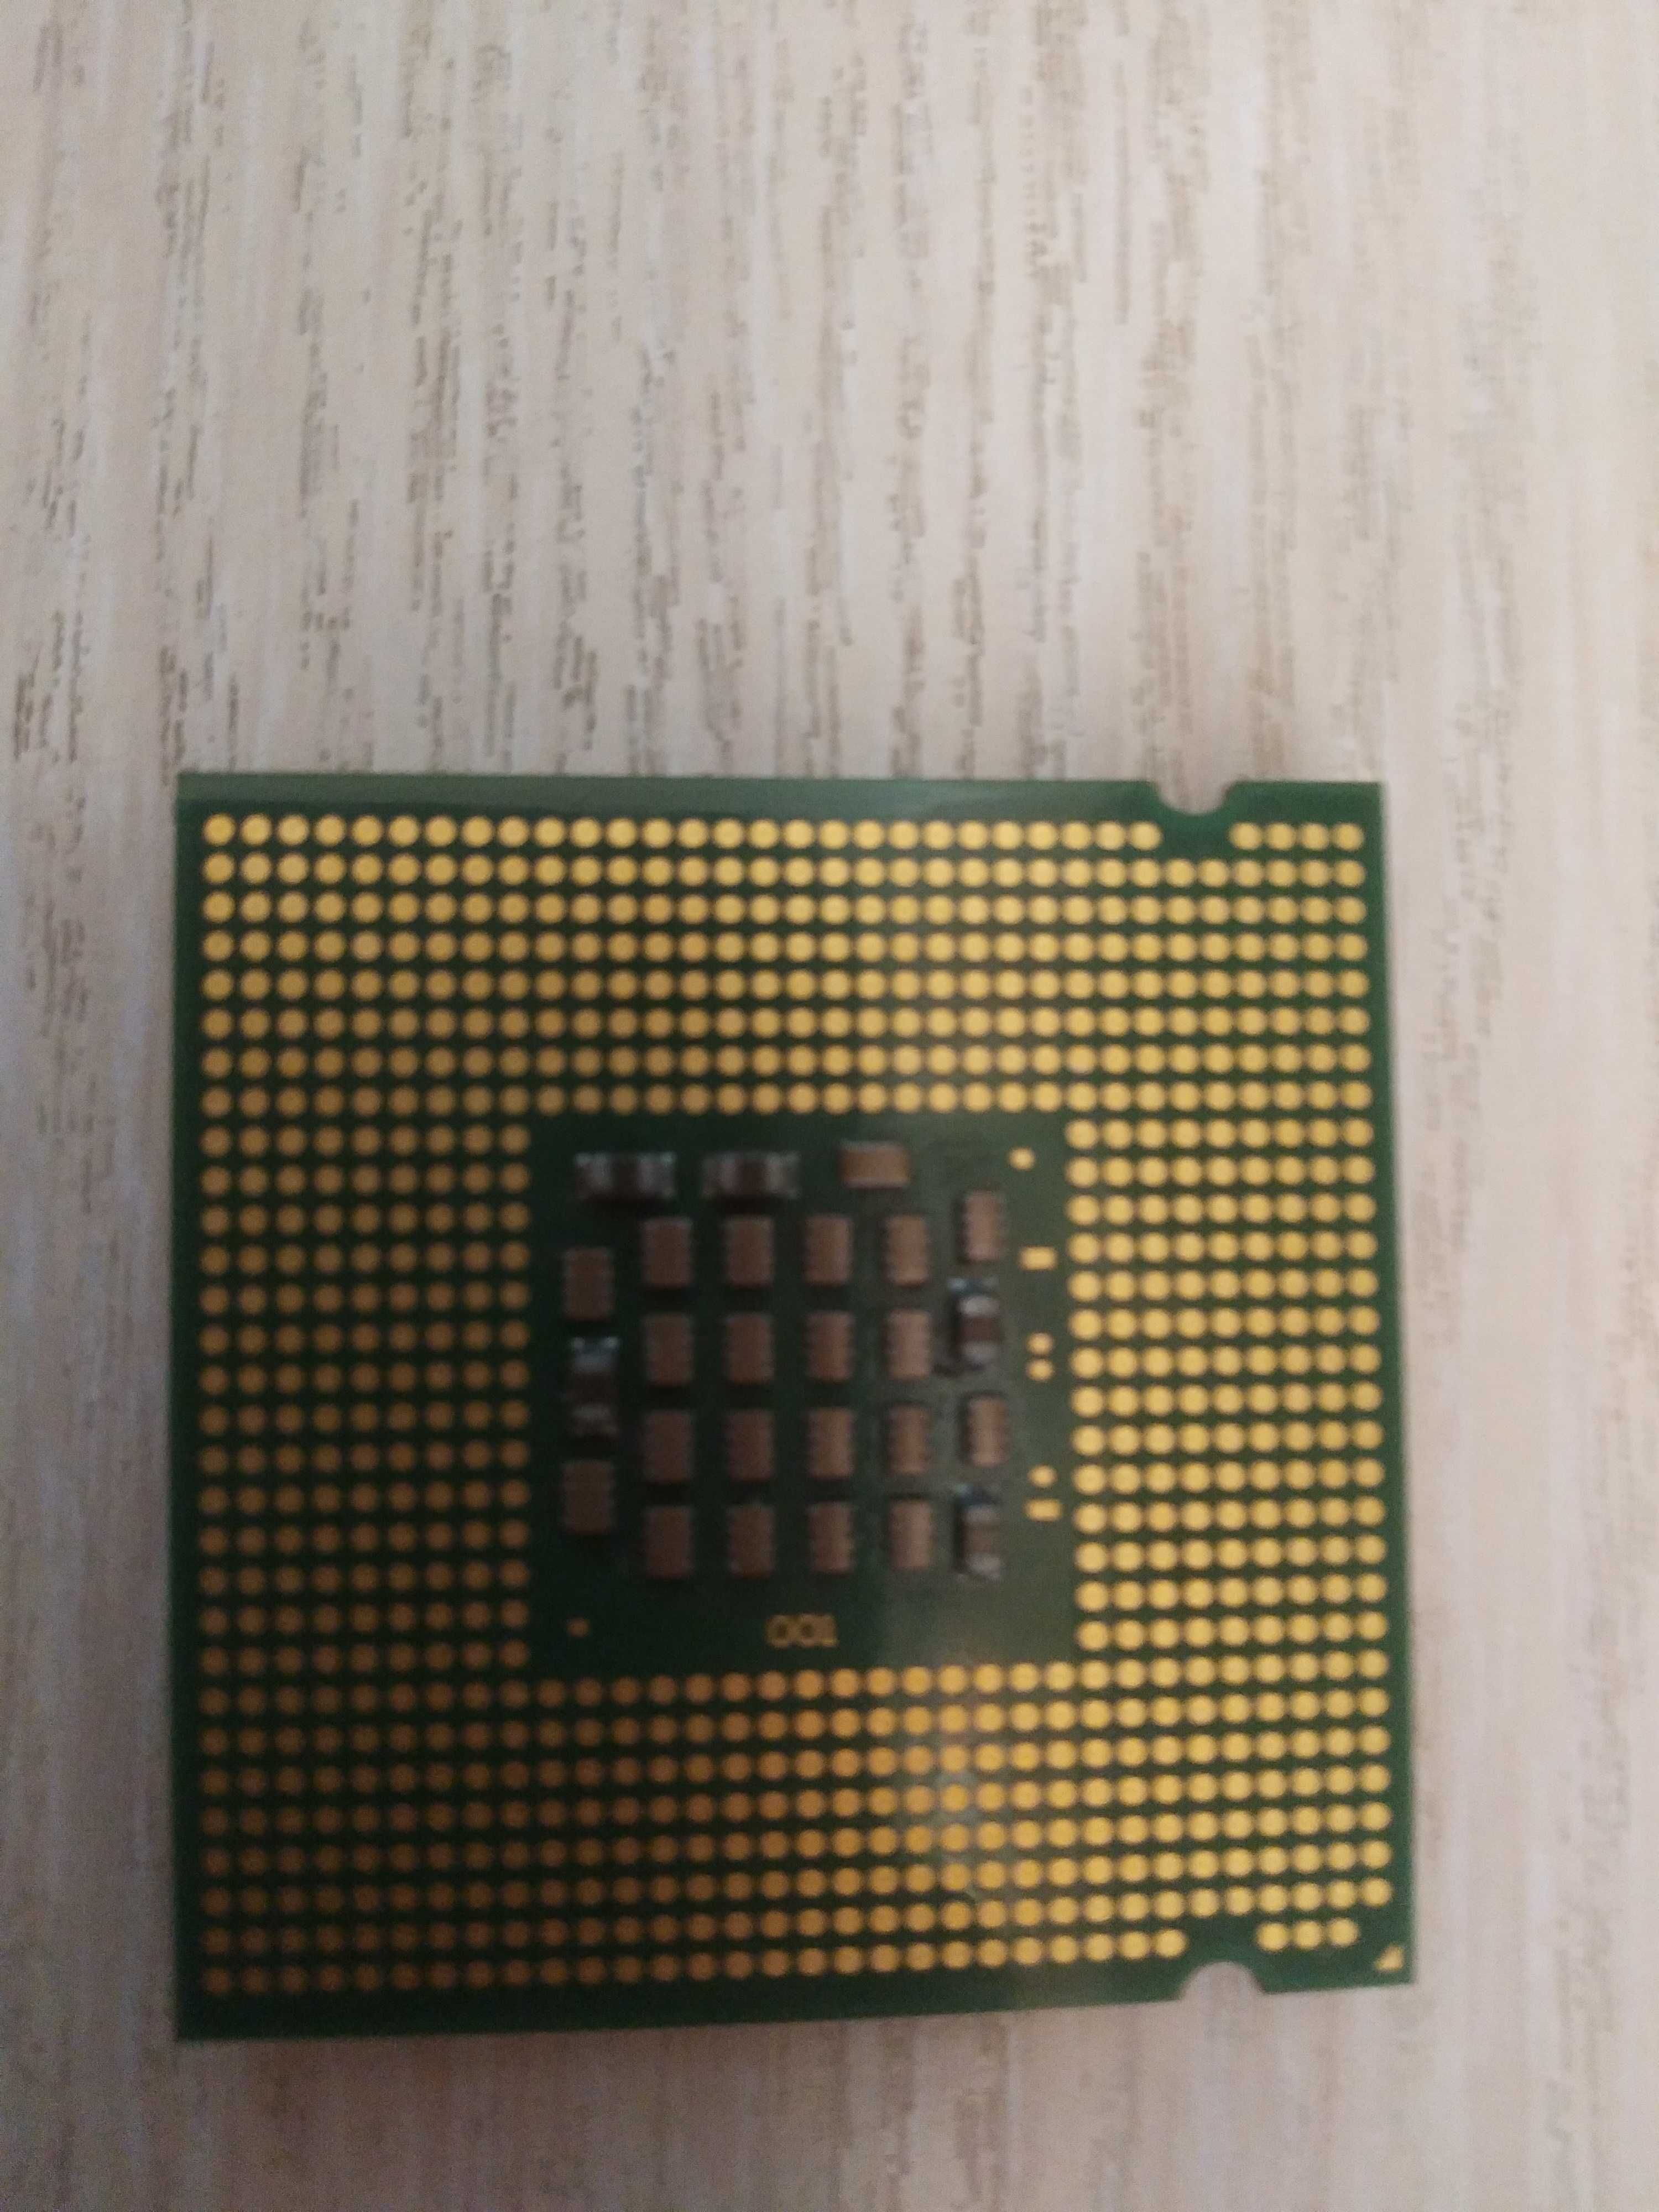 Процесор Intel Celeron D 351 3.20 GHz/256/533